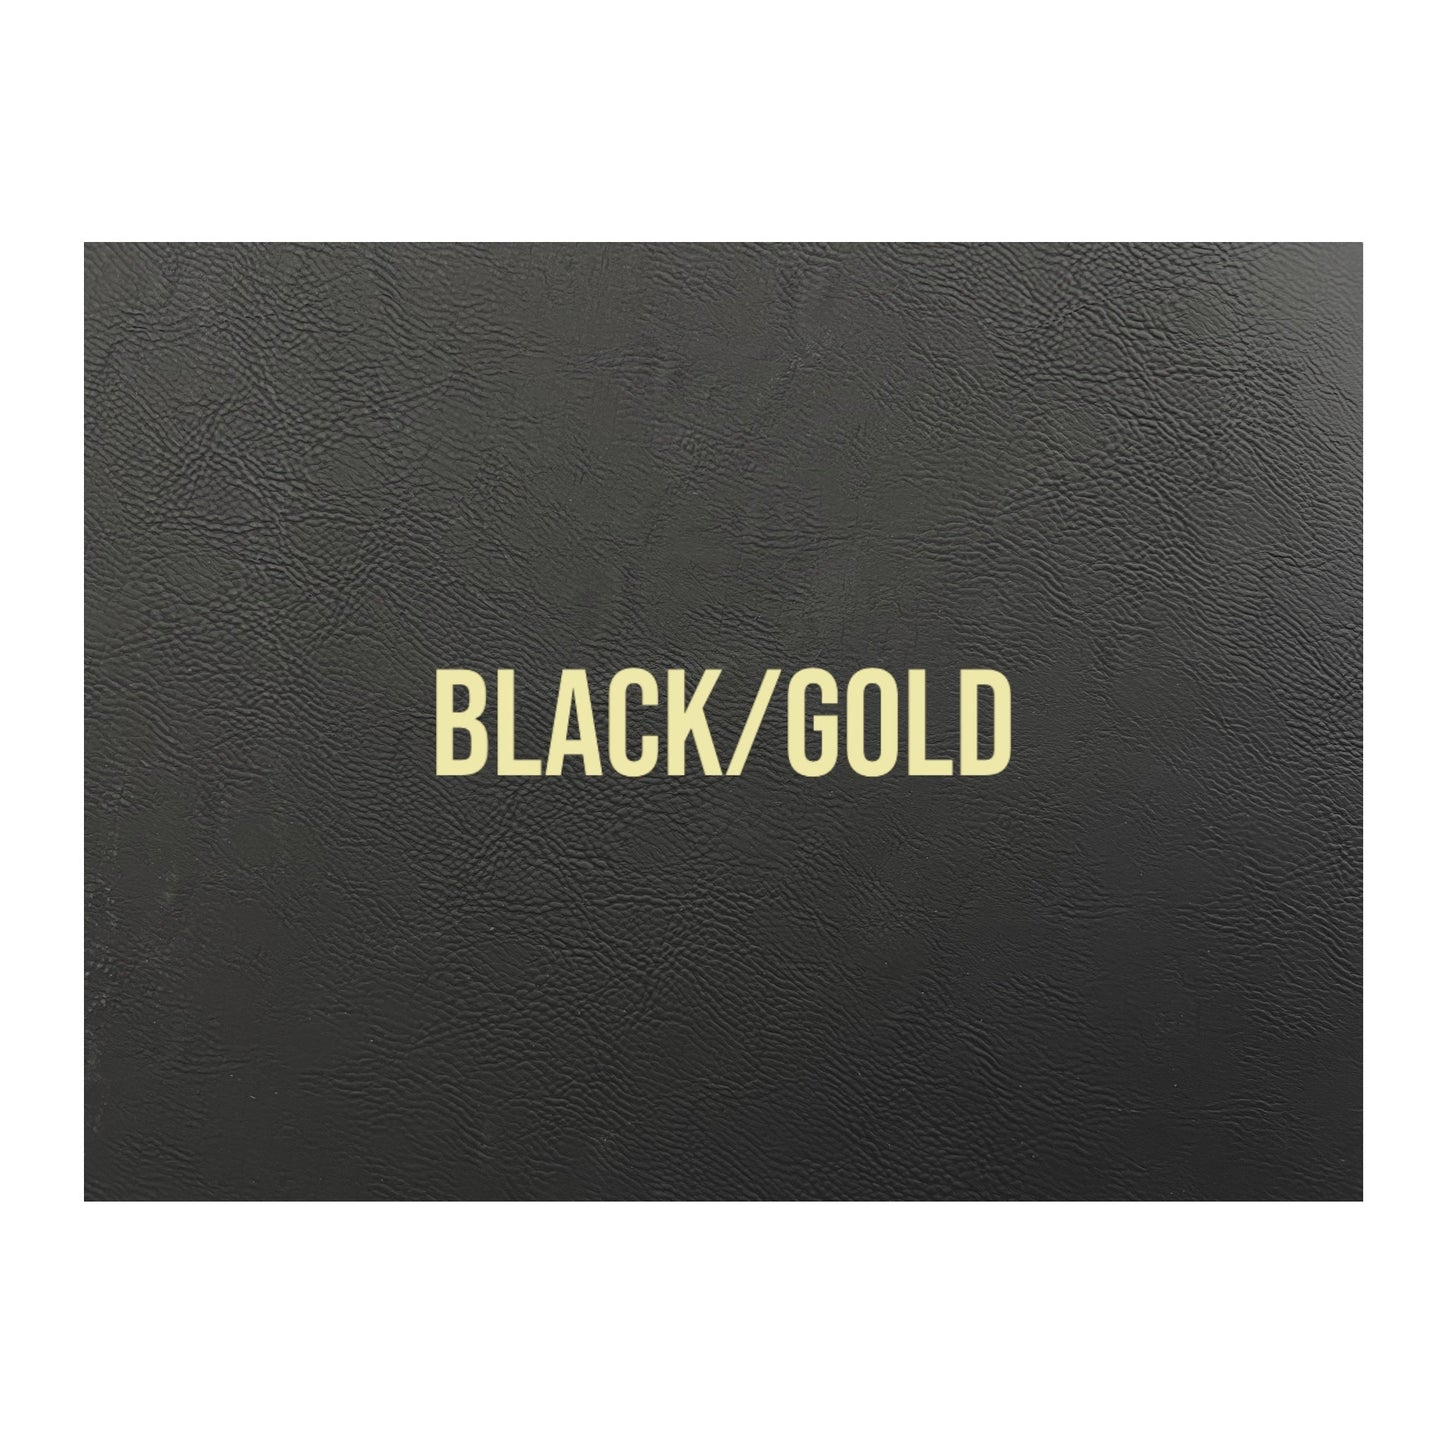 NO ADHESIVE BLACK/GOLD LEATHERETTE SHEET (12"x24")